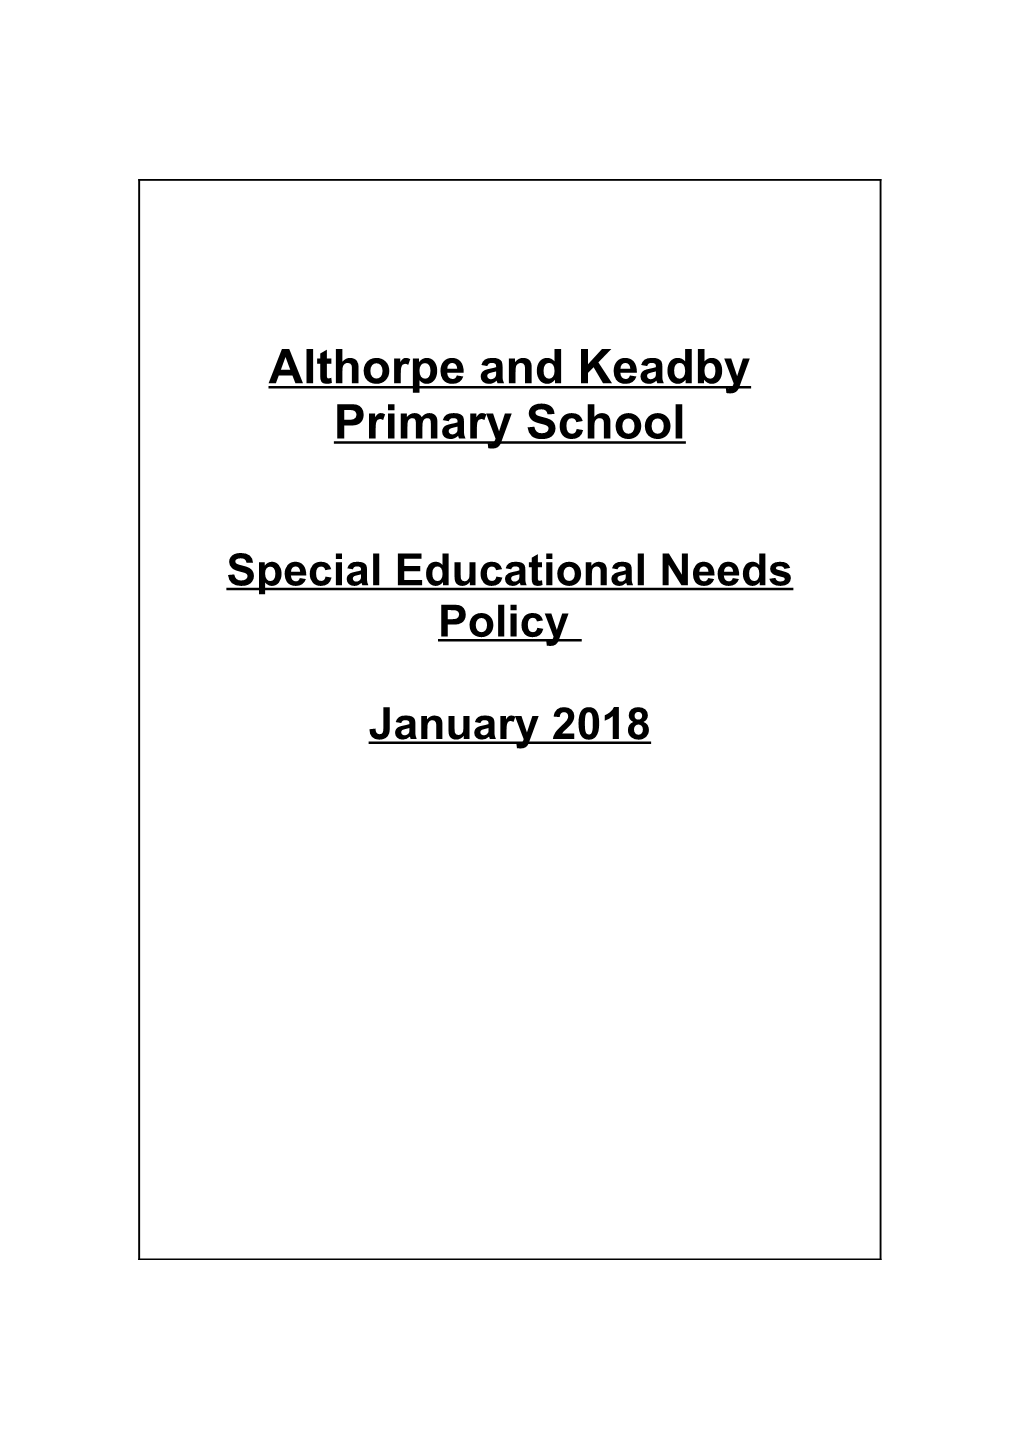 Althorpe and Keadby Primary School